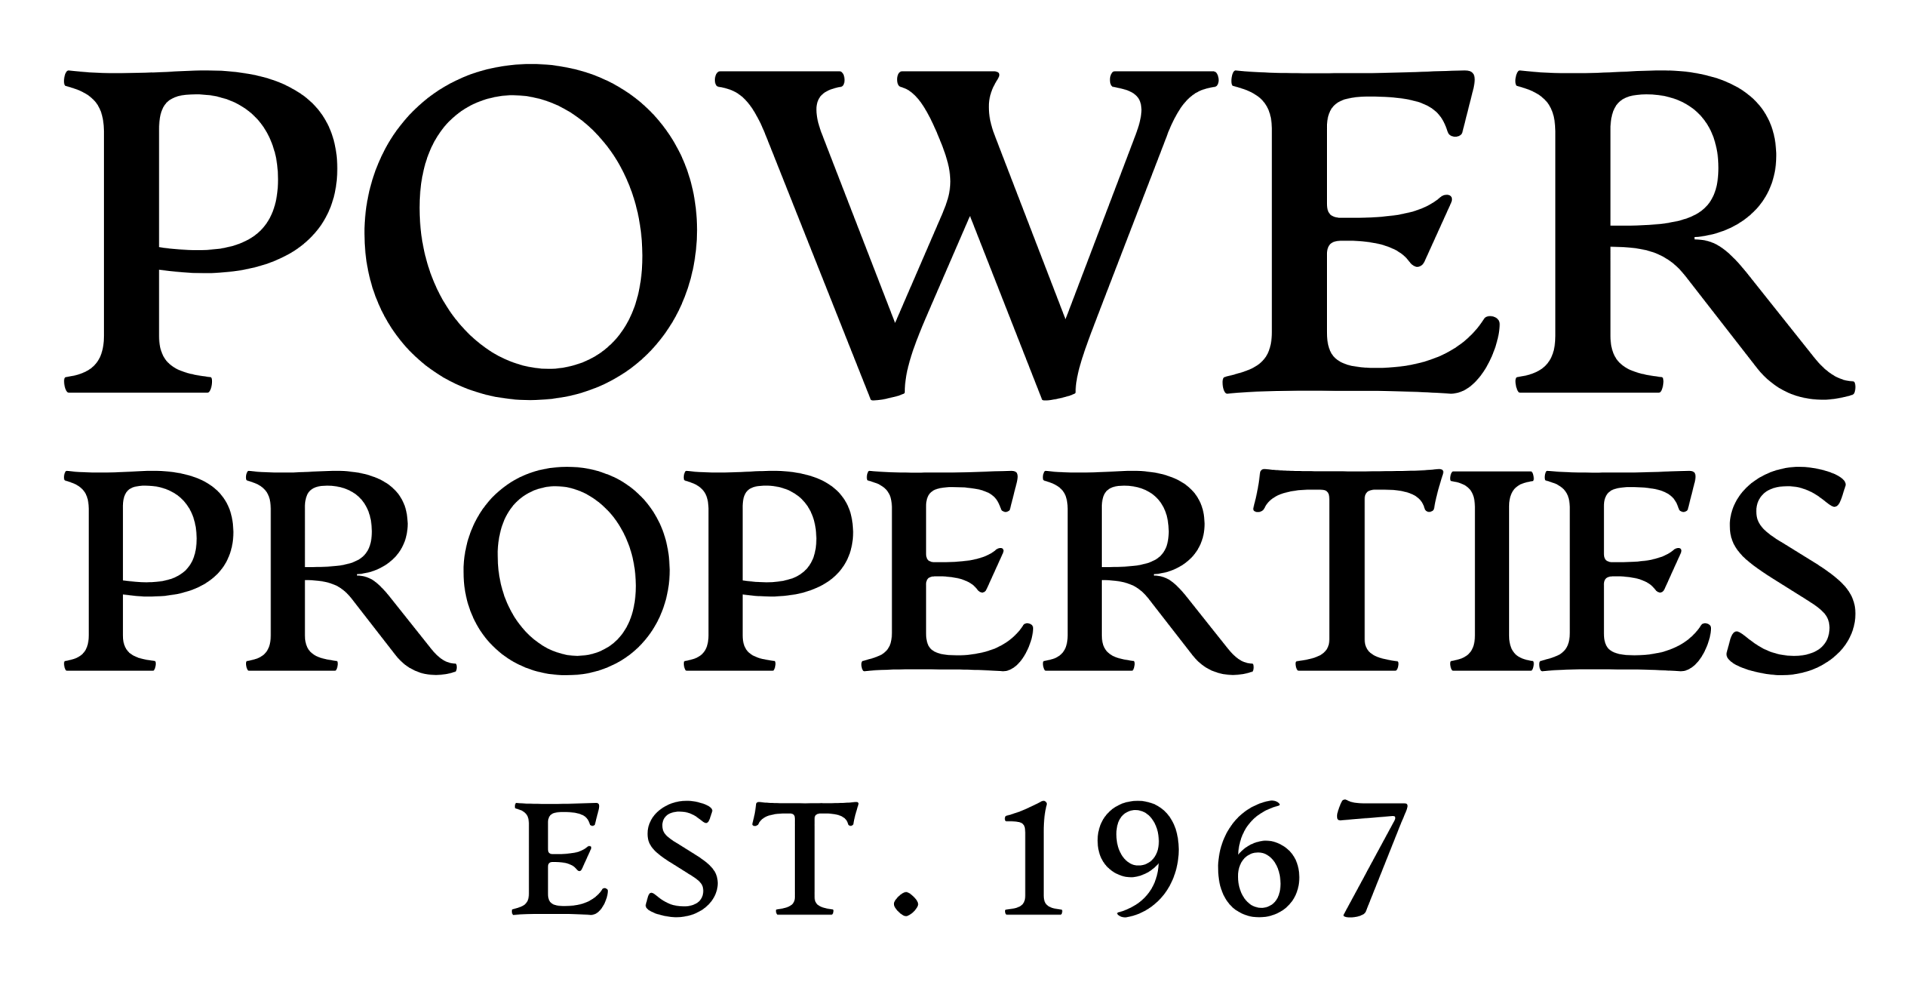 Power Properties Logo